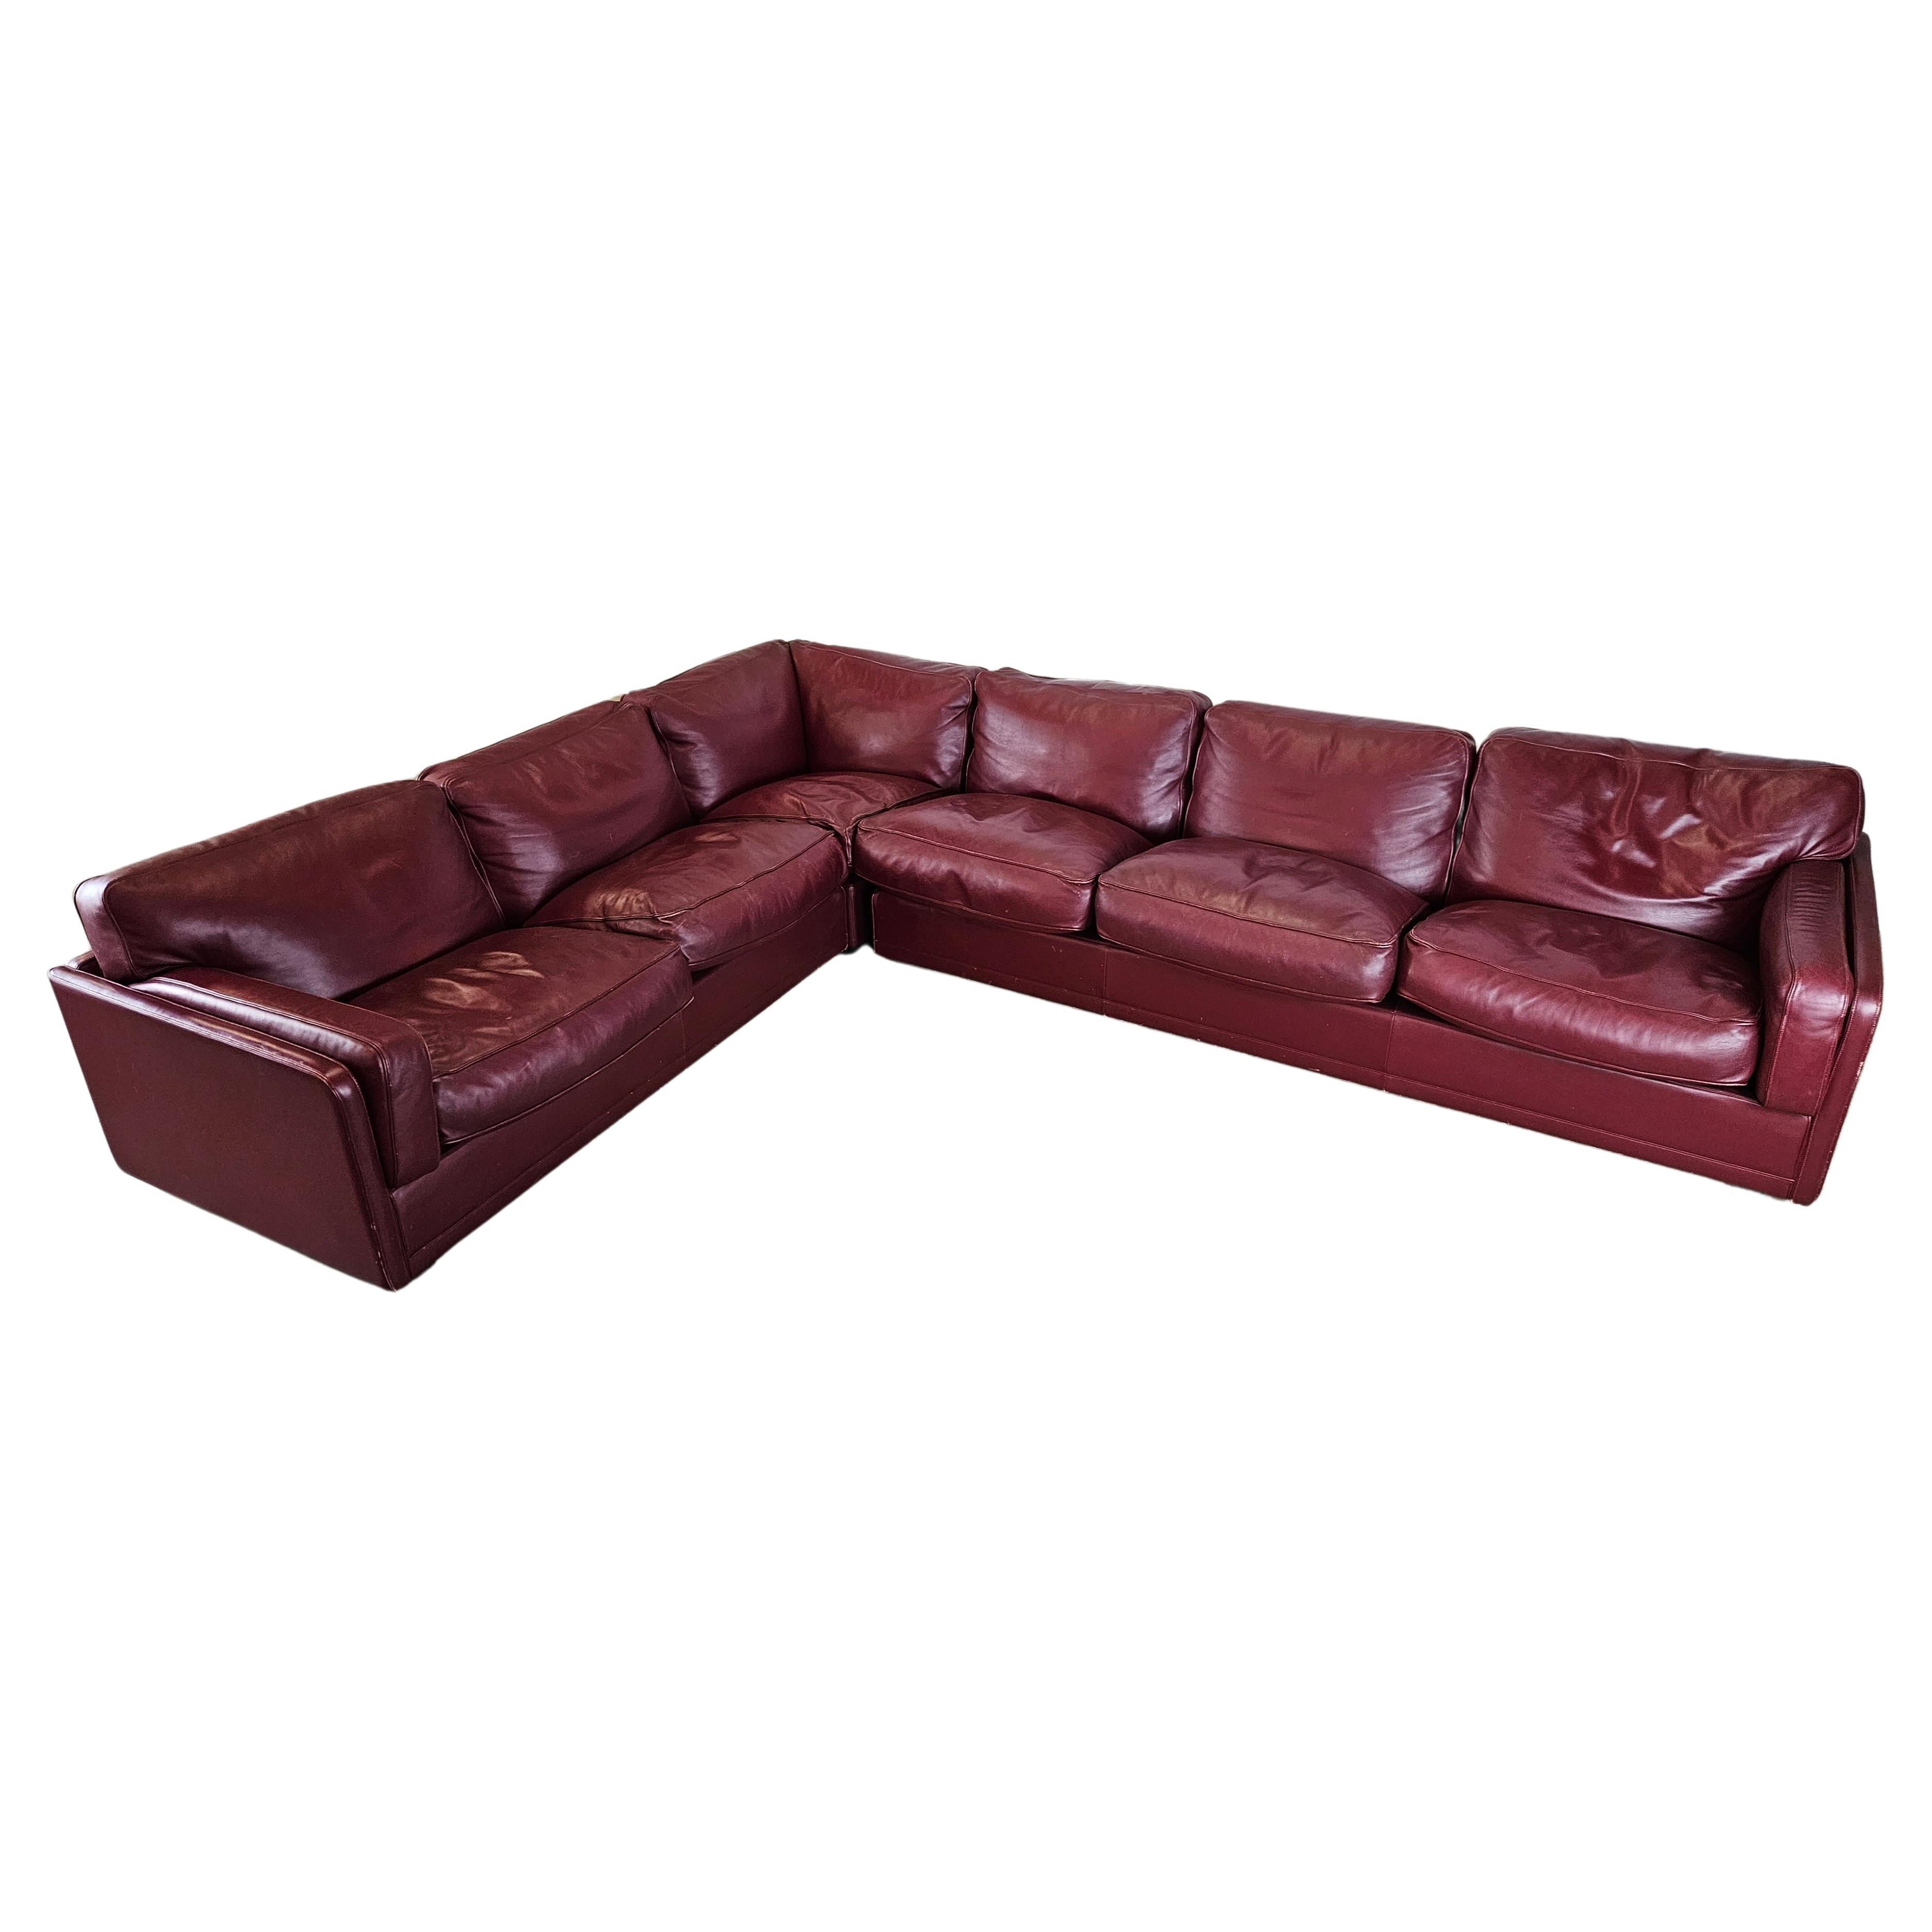 Socrates modular leather sofa by Poltrona Frau, 1970s